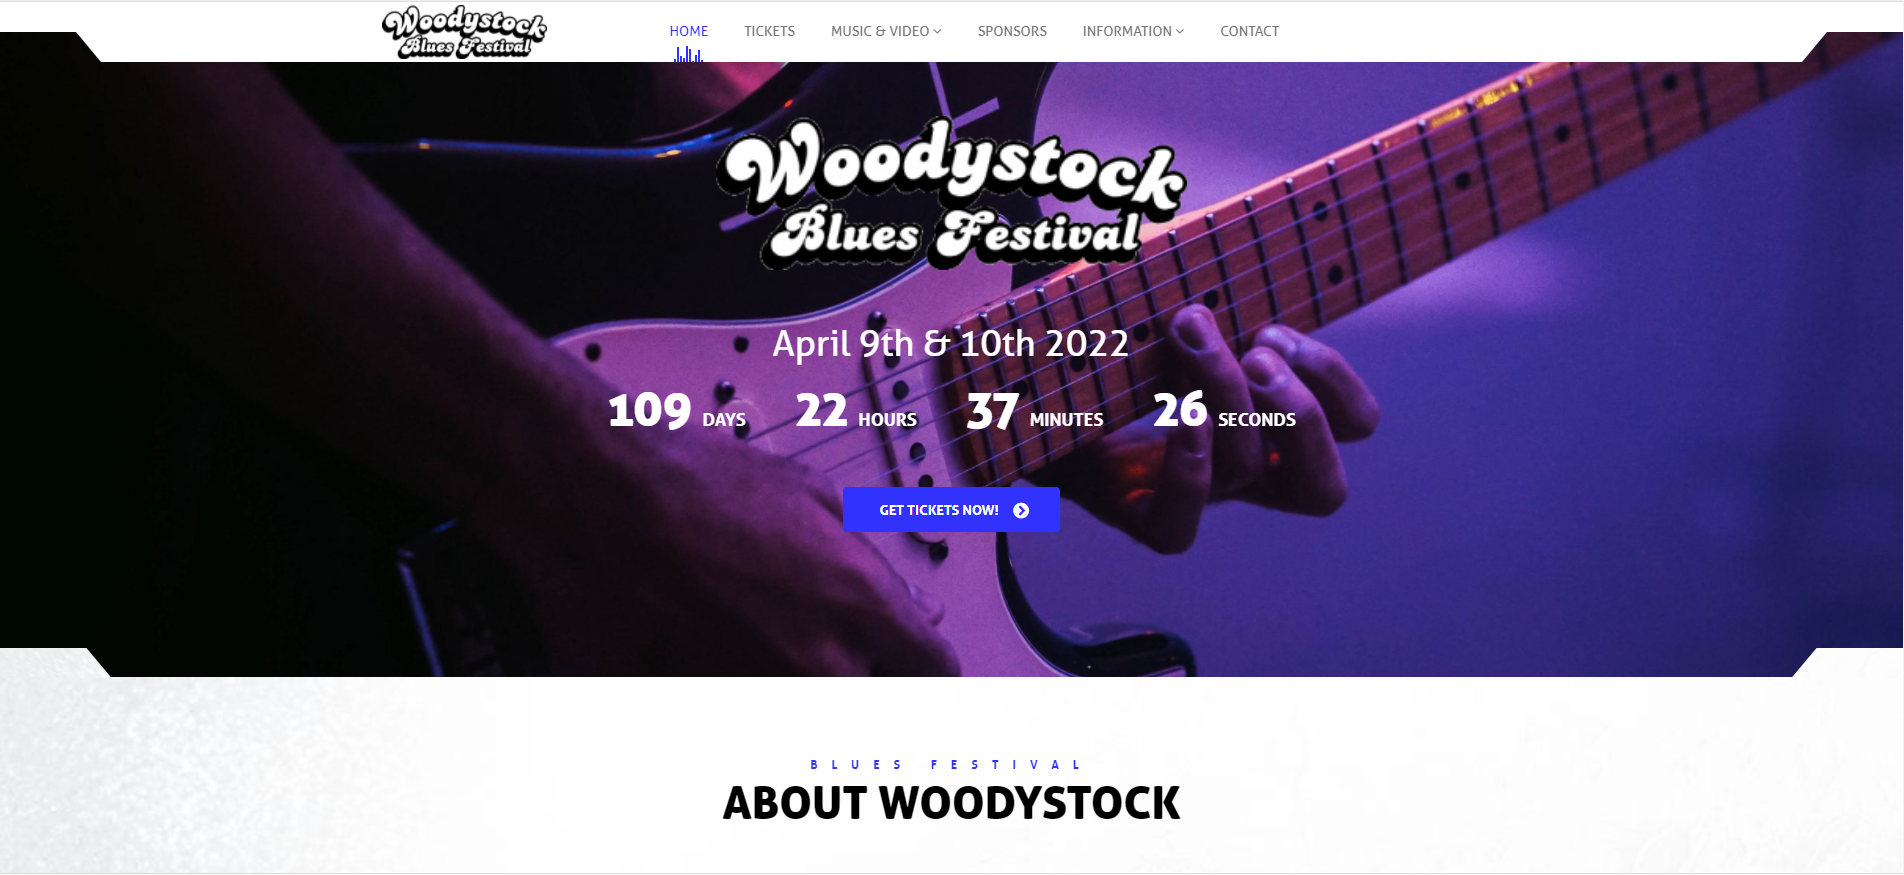 Woddystock